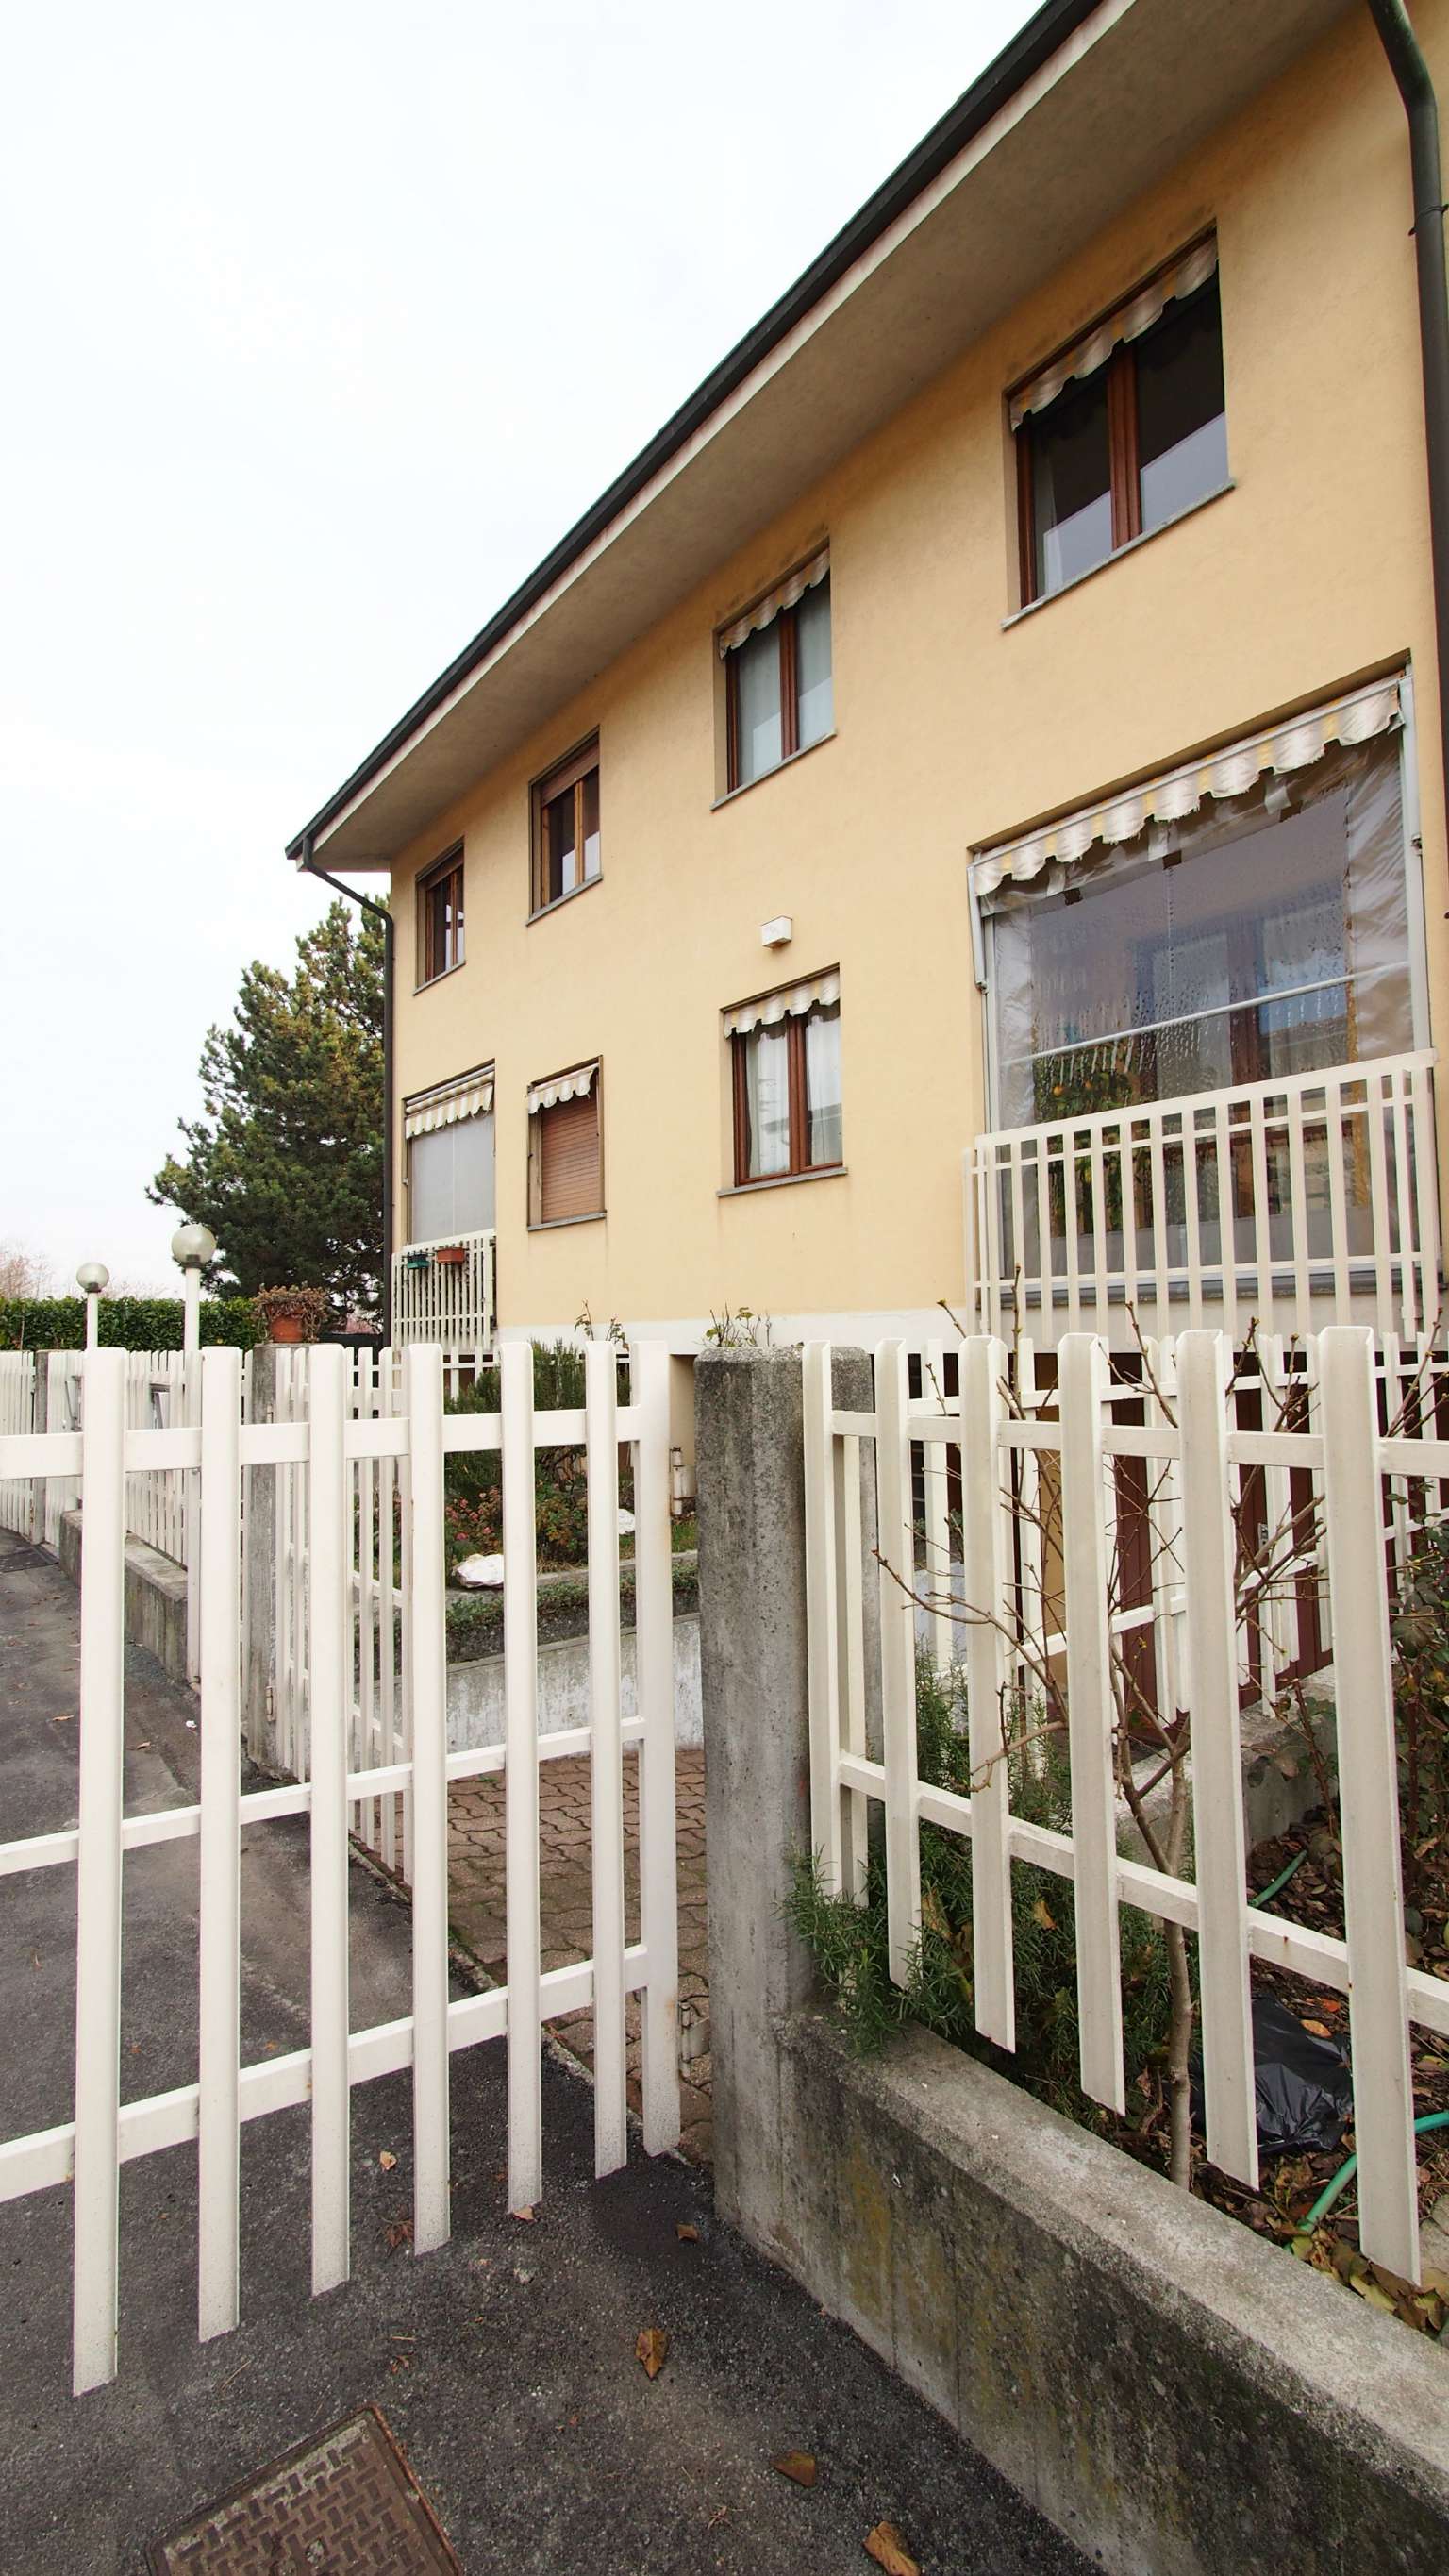 Casa indipendente in vendita a orbassano via mazzini for Casa indipendente